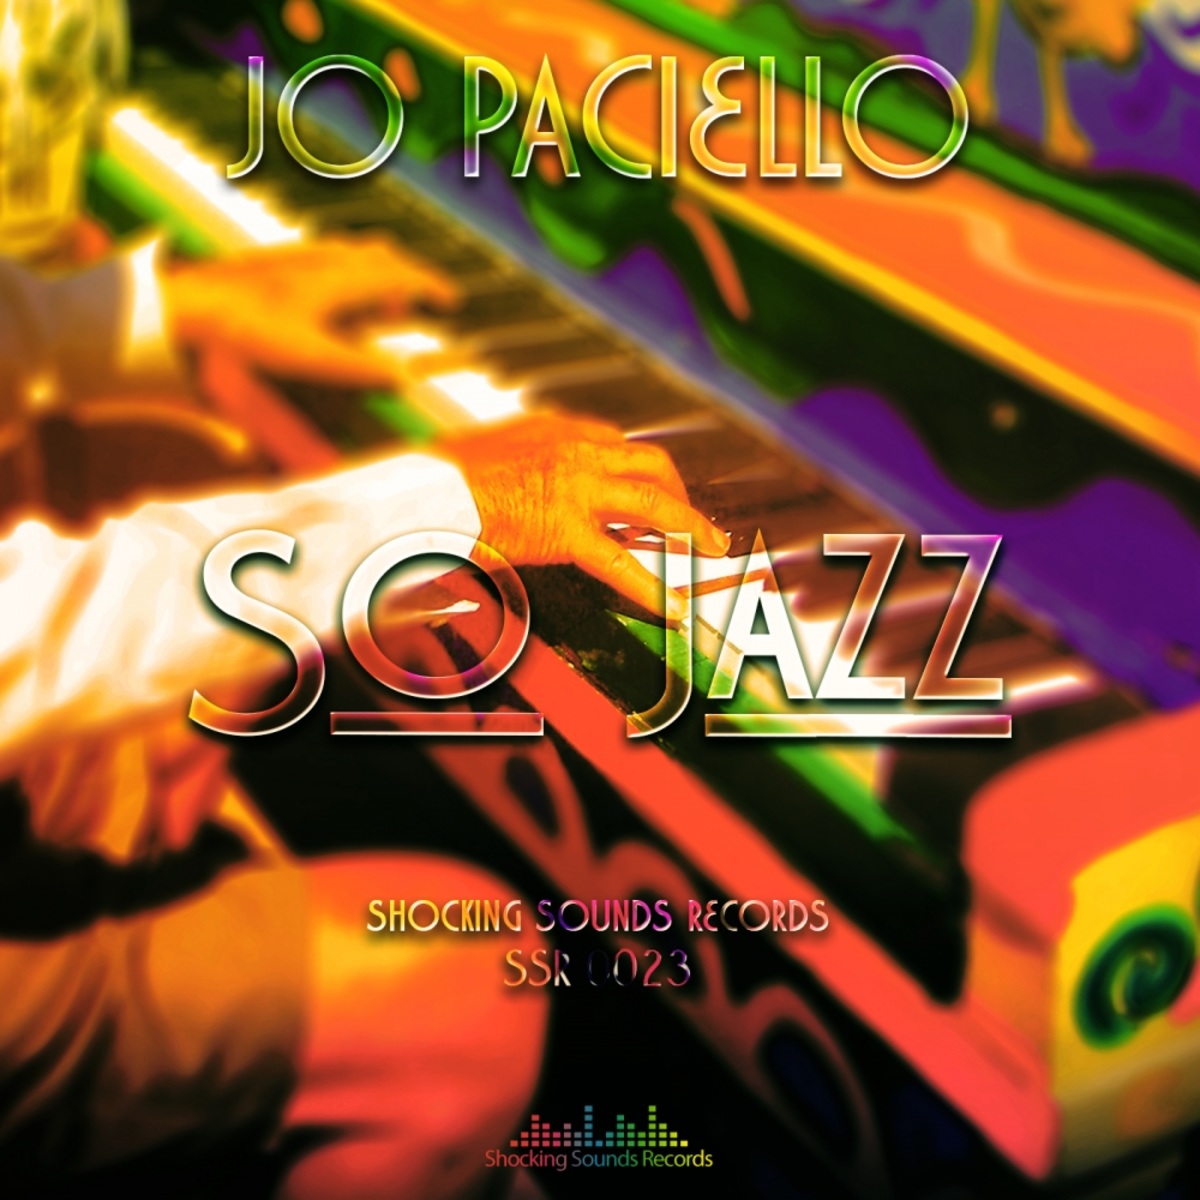 Jo Paciello - So Jazz / Shocking Sounds Records